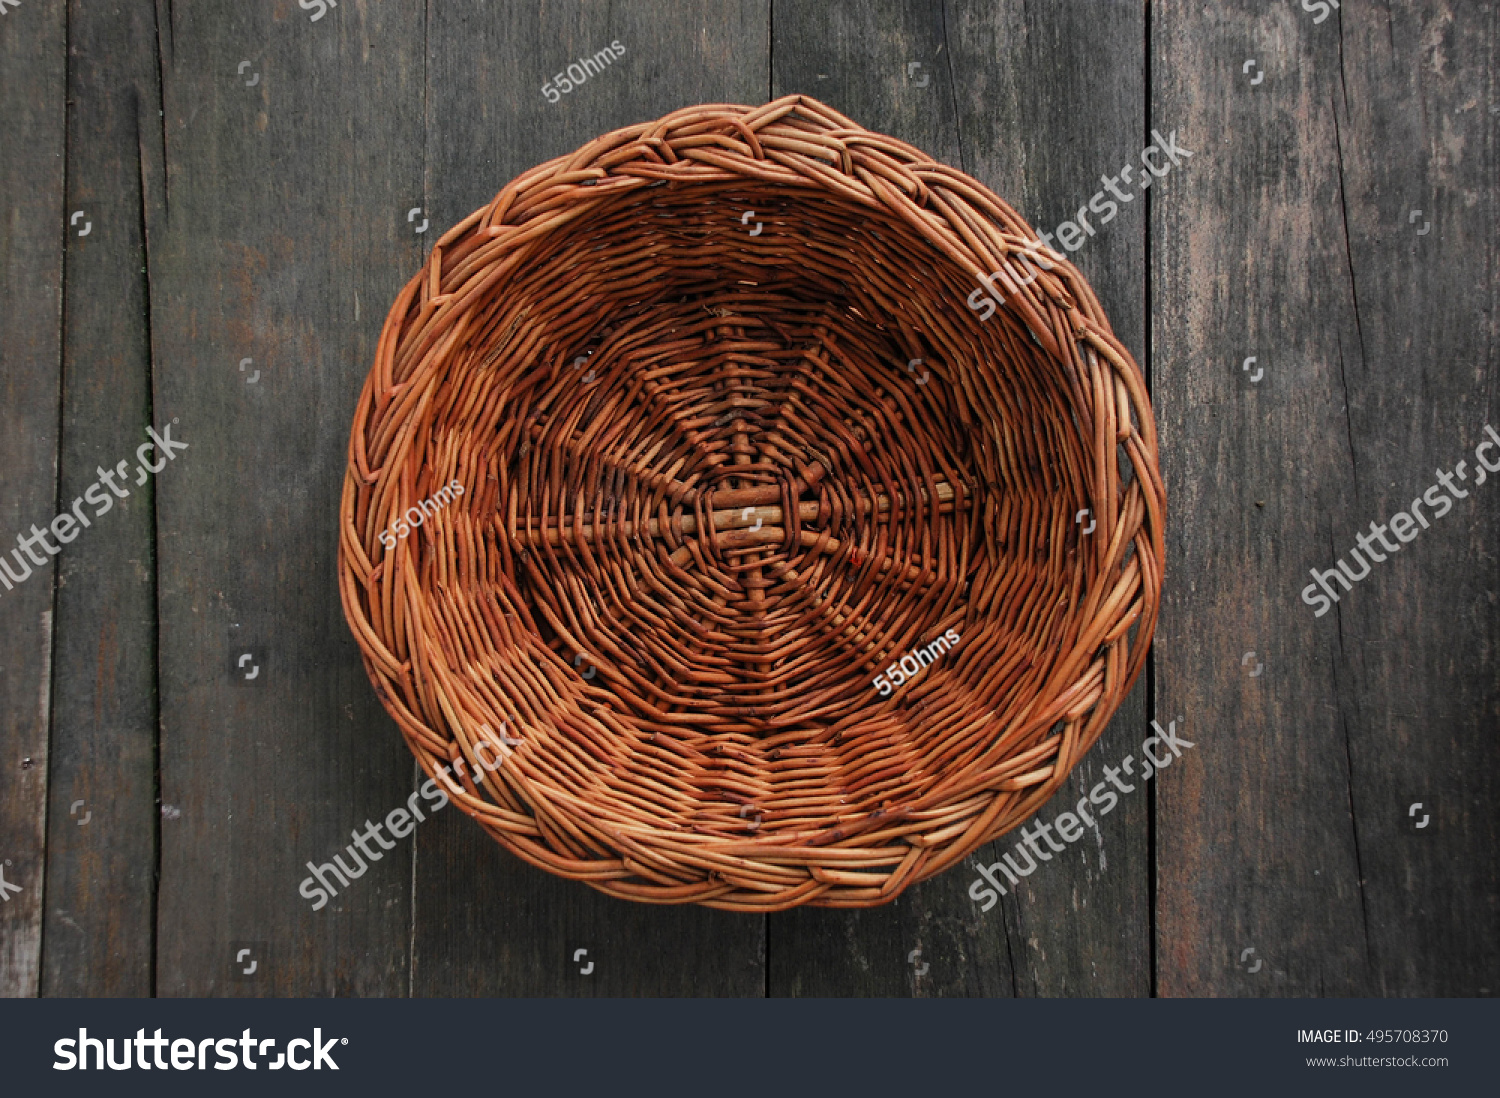 wood weave fruit basket on wood texture, top view #495708370